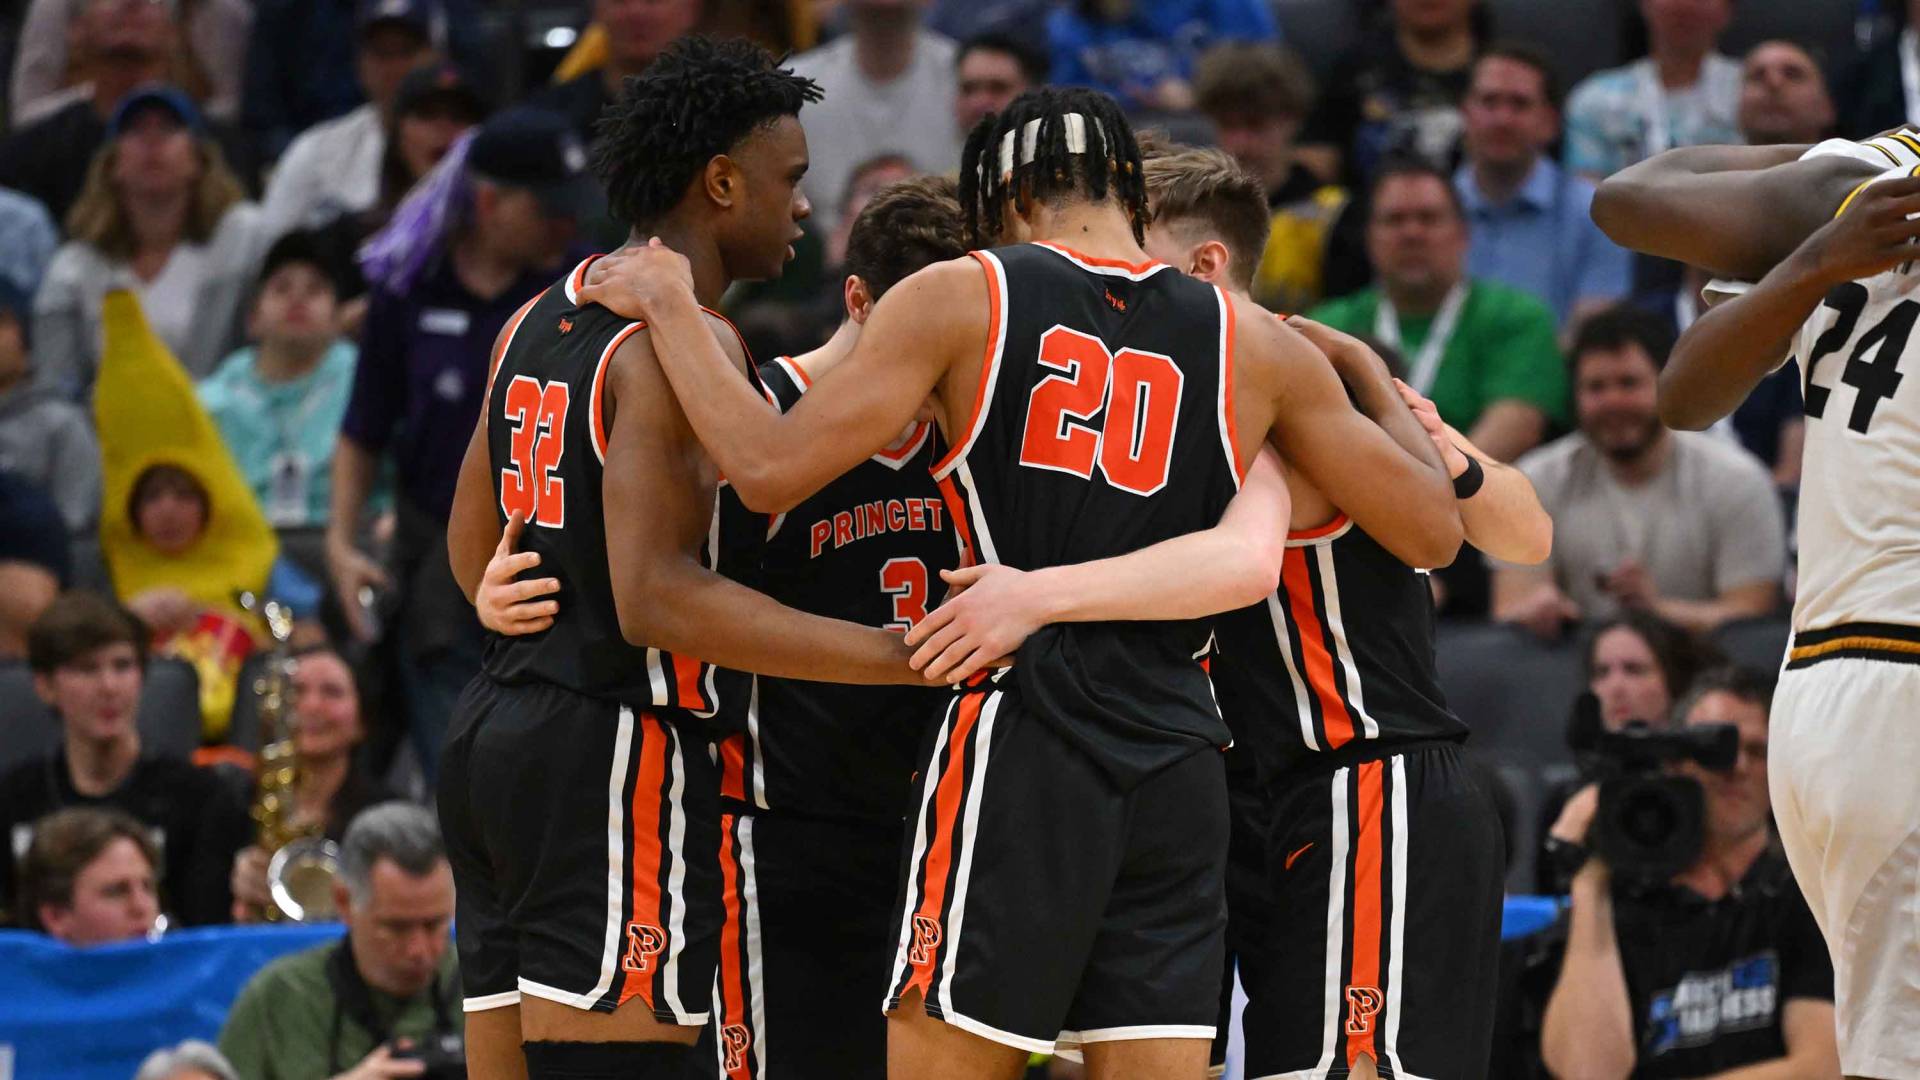 Princeton basketball team in a huddle